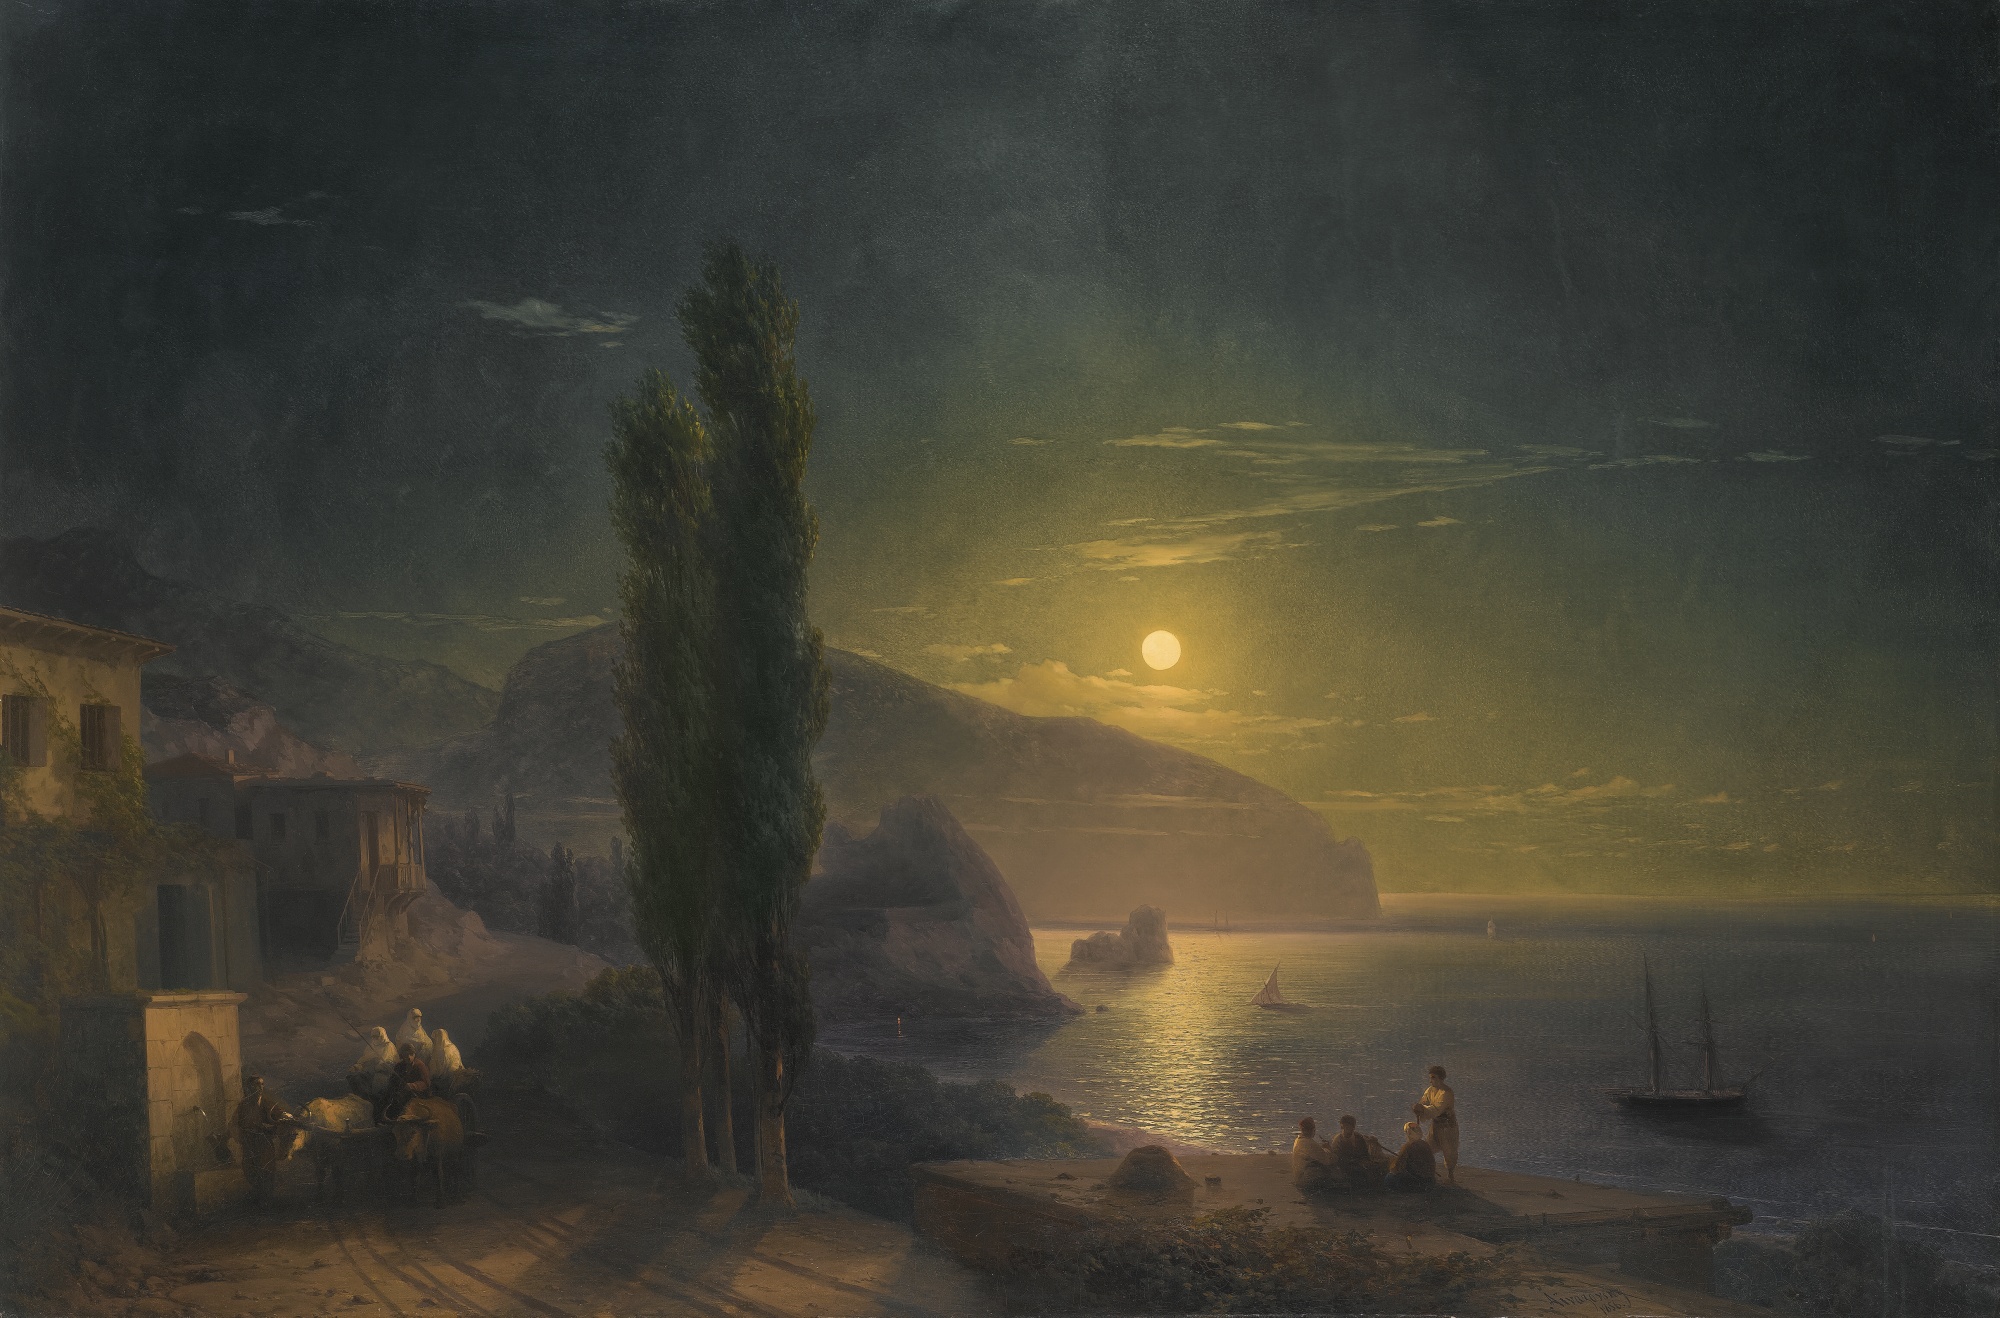 Айвазовский. Восход луны над Aю-Даг. 1856